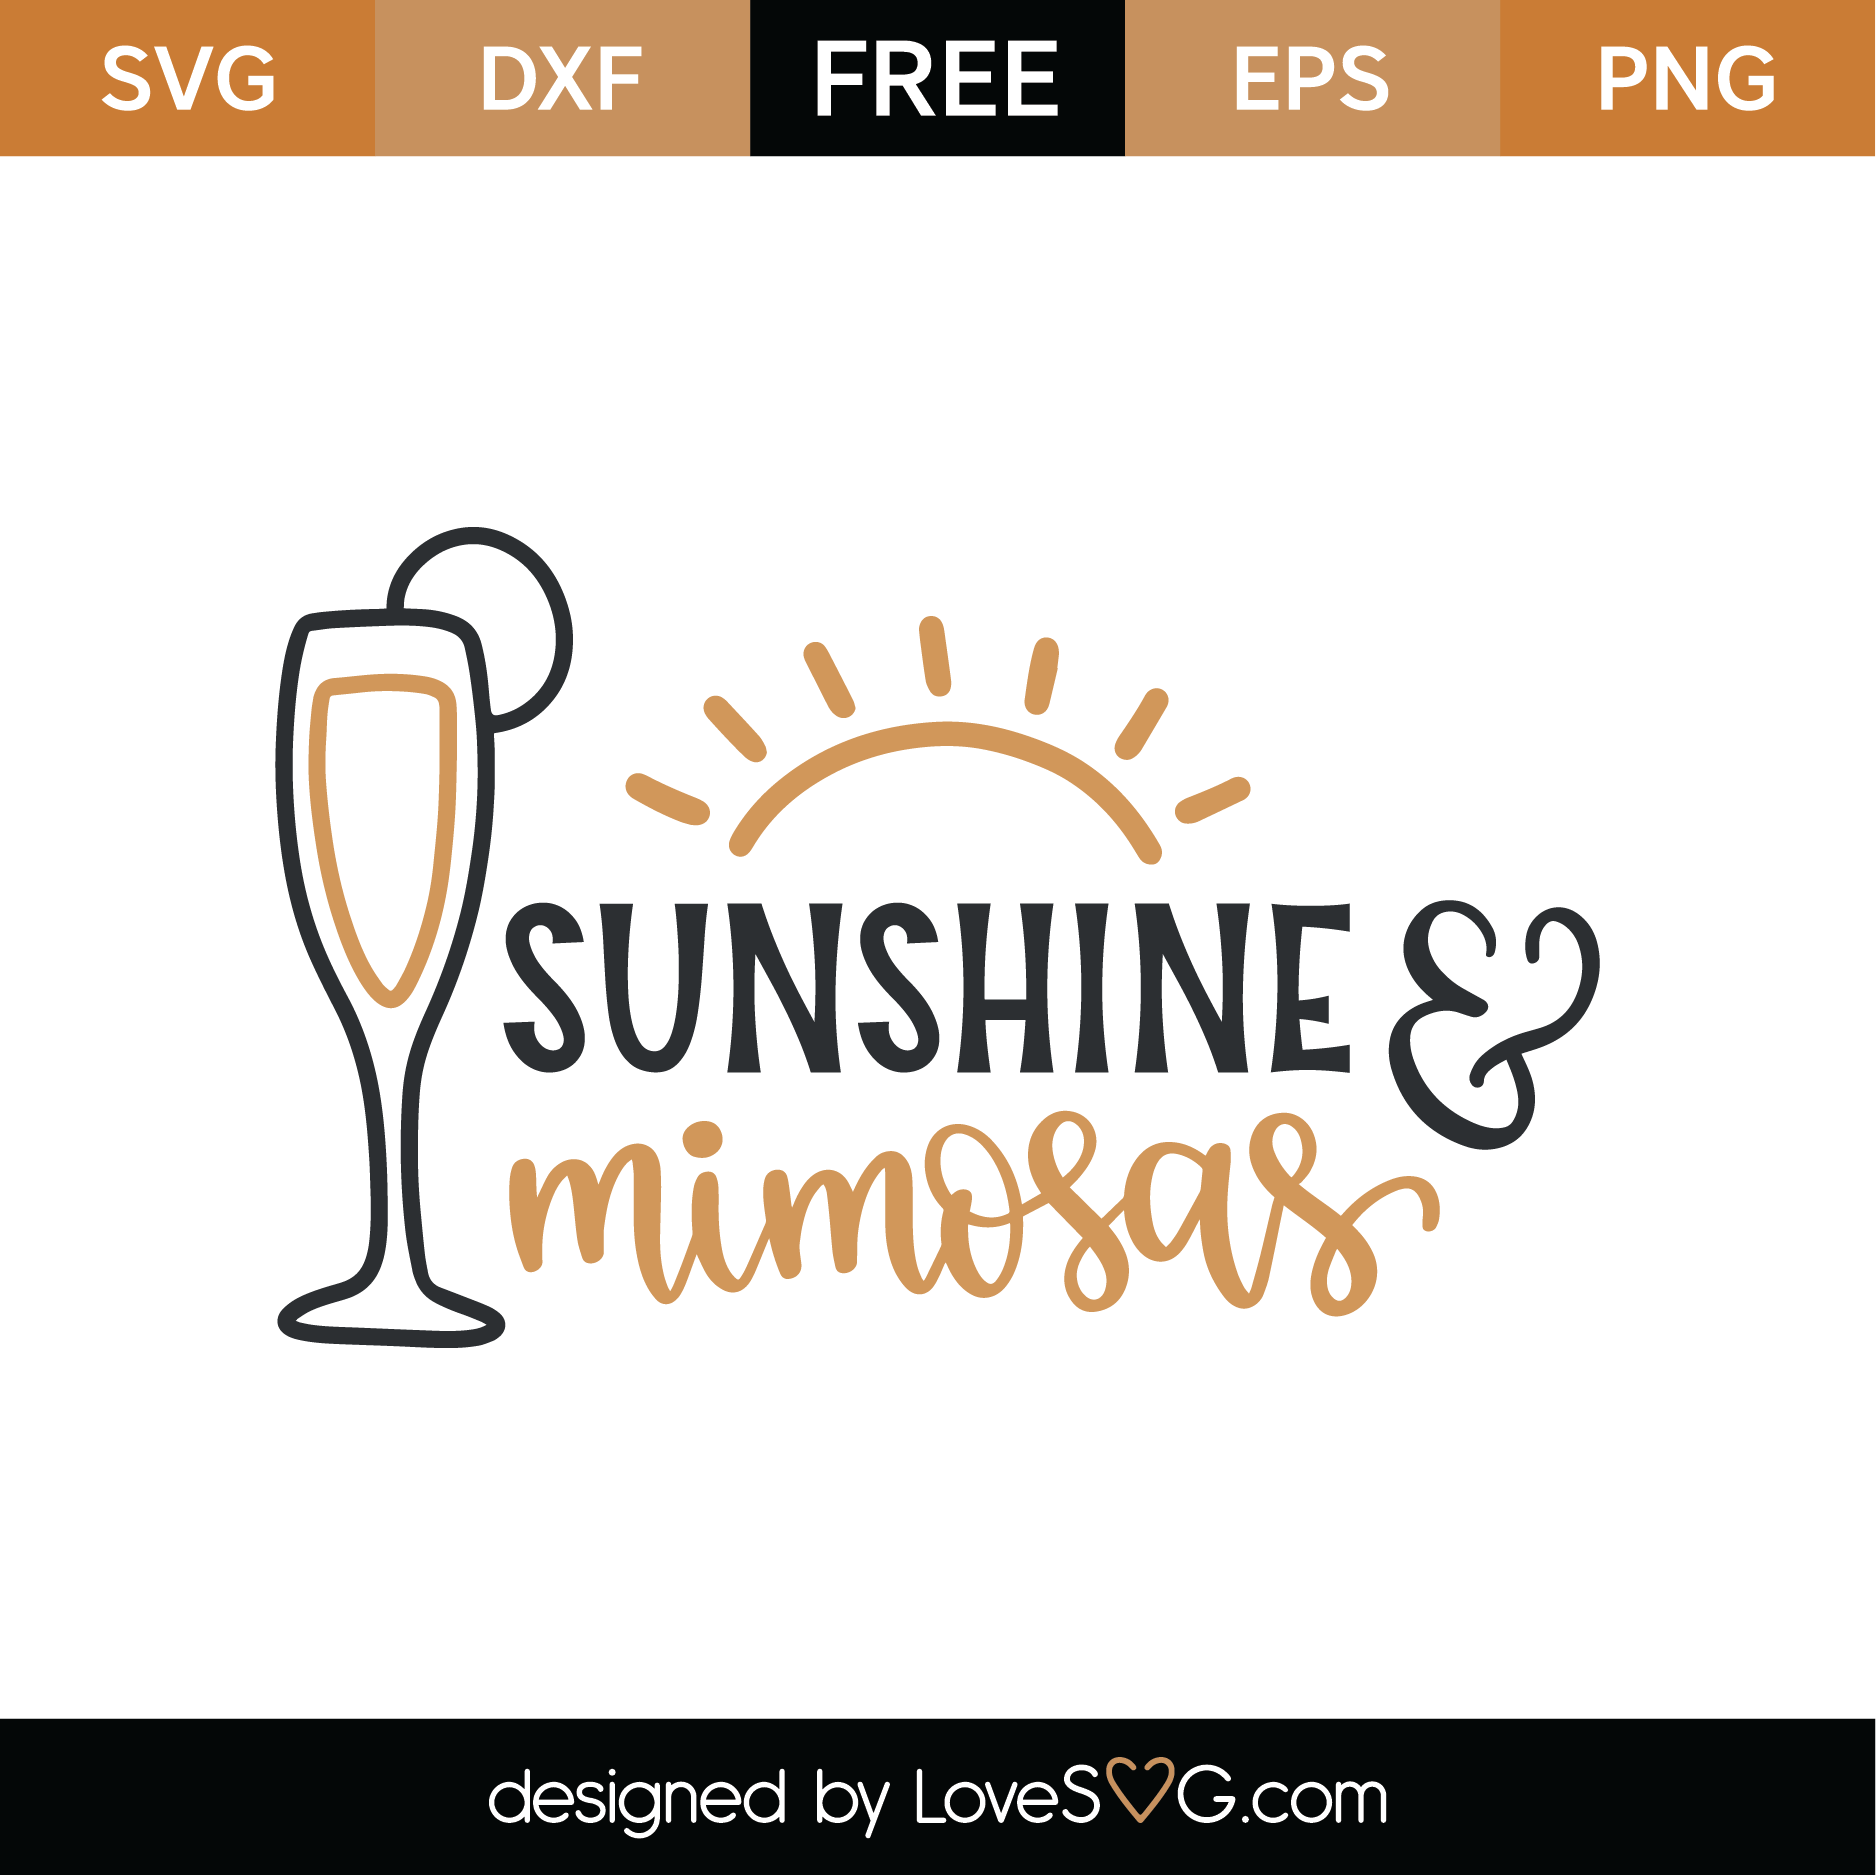 Free Sunshine And Mimosas SVG Cut File | Lovesvg.com